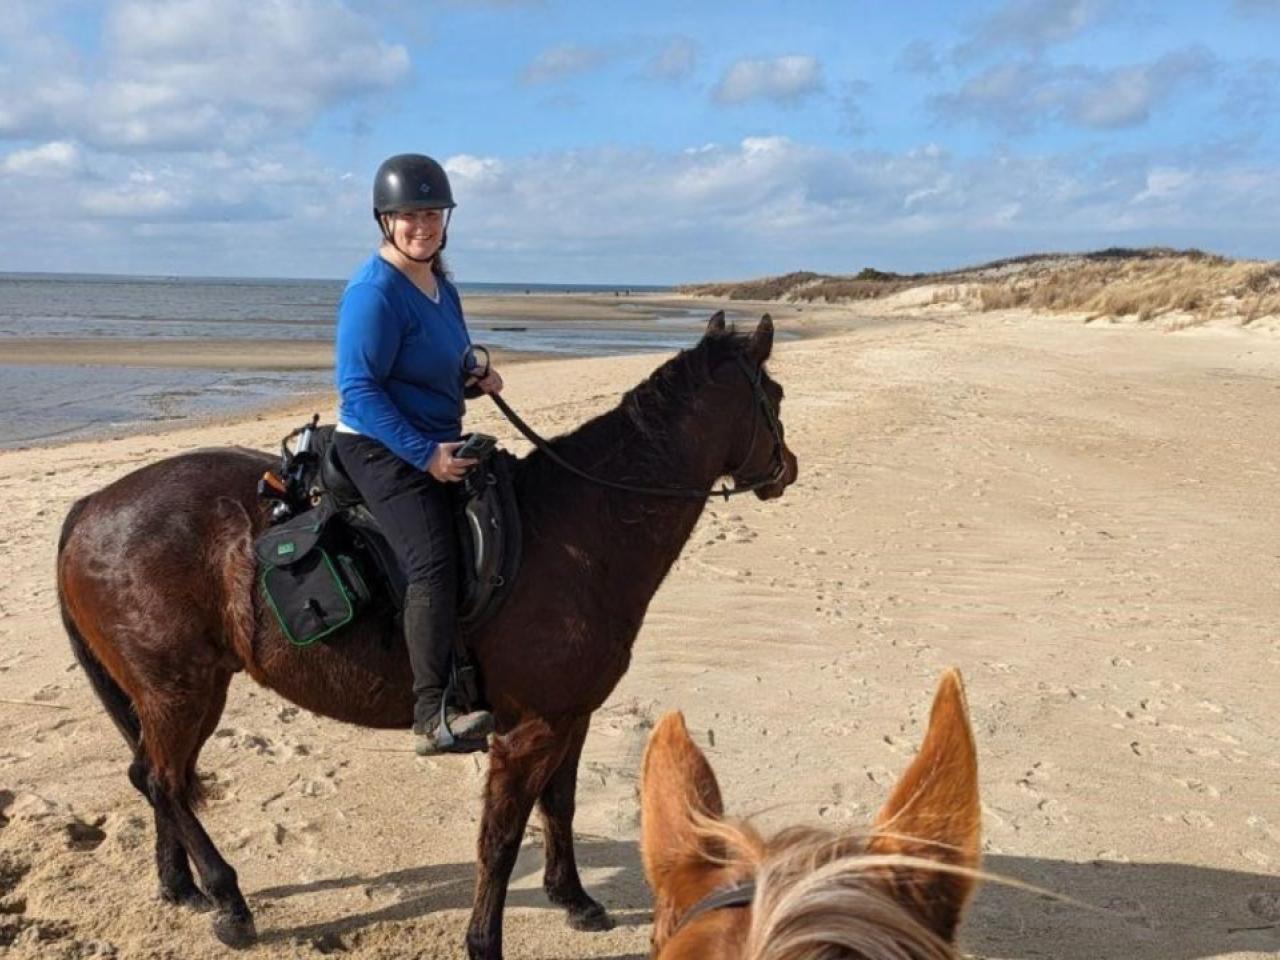 Julia Reilly riding a horse on a beach